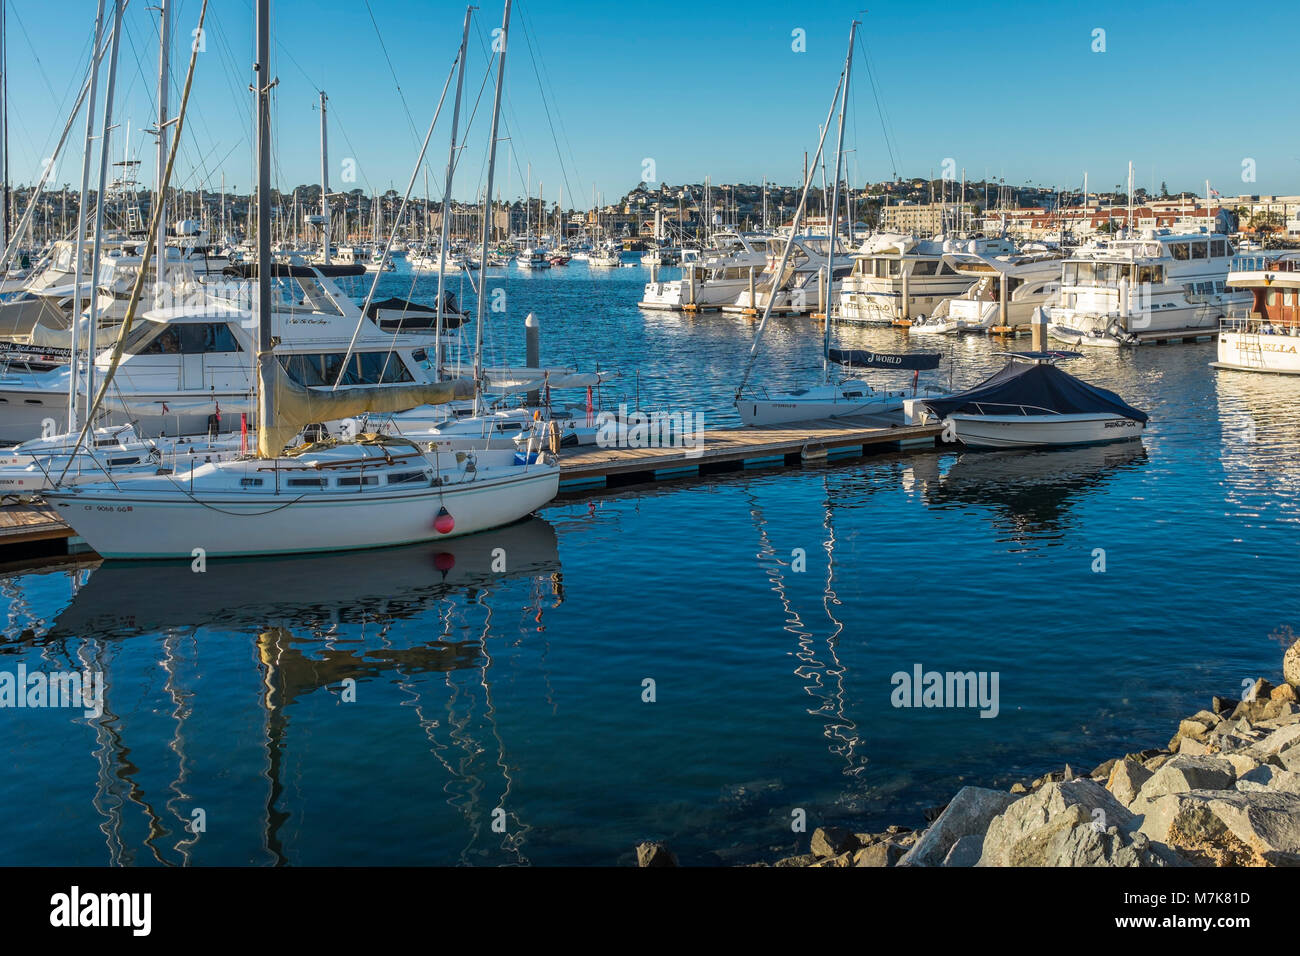 SAN DIEGO, CALIFORNA, STATI UNITI D'AMERICA - Yacht ormeggiati nell'Americas Cup Harbour off Shelter Island. Foto Stock